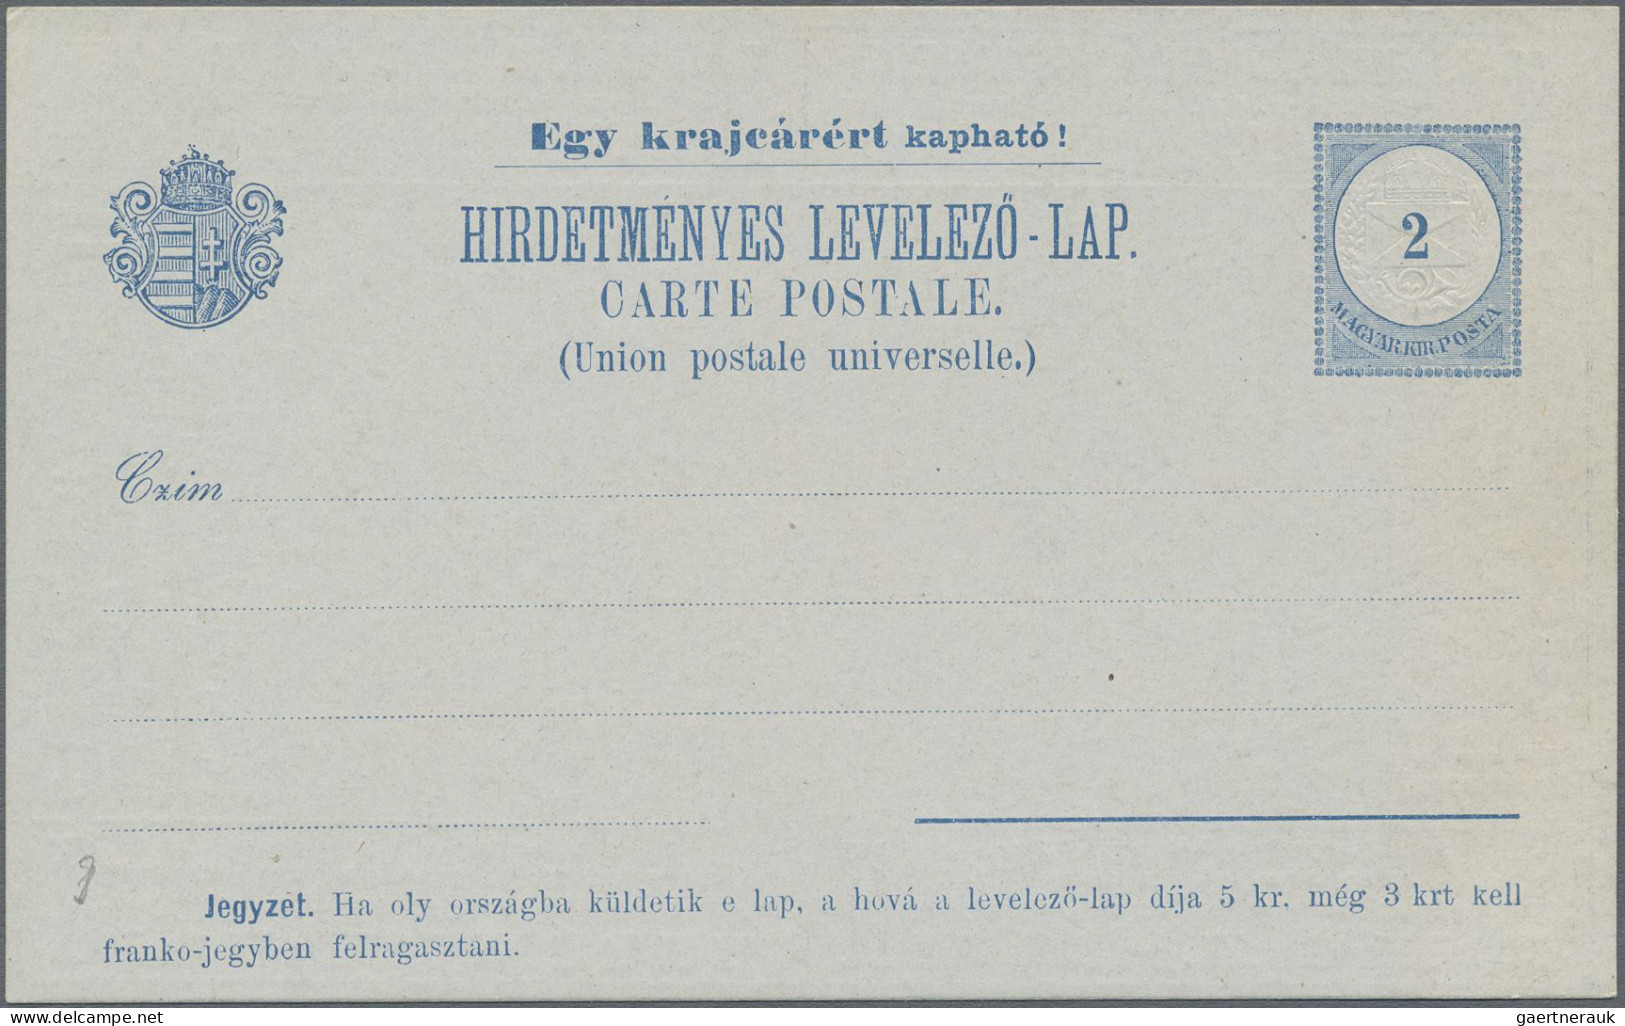 Hungary - Postal Stationary: 1892, 2 Kr blau Privat-Anzeigenpostkarte, komplette